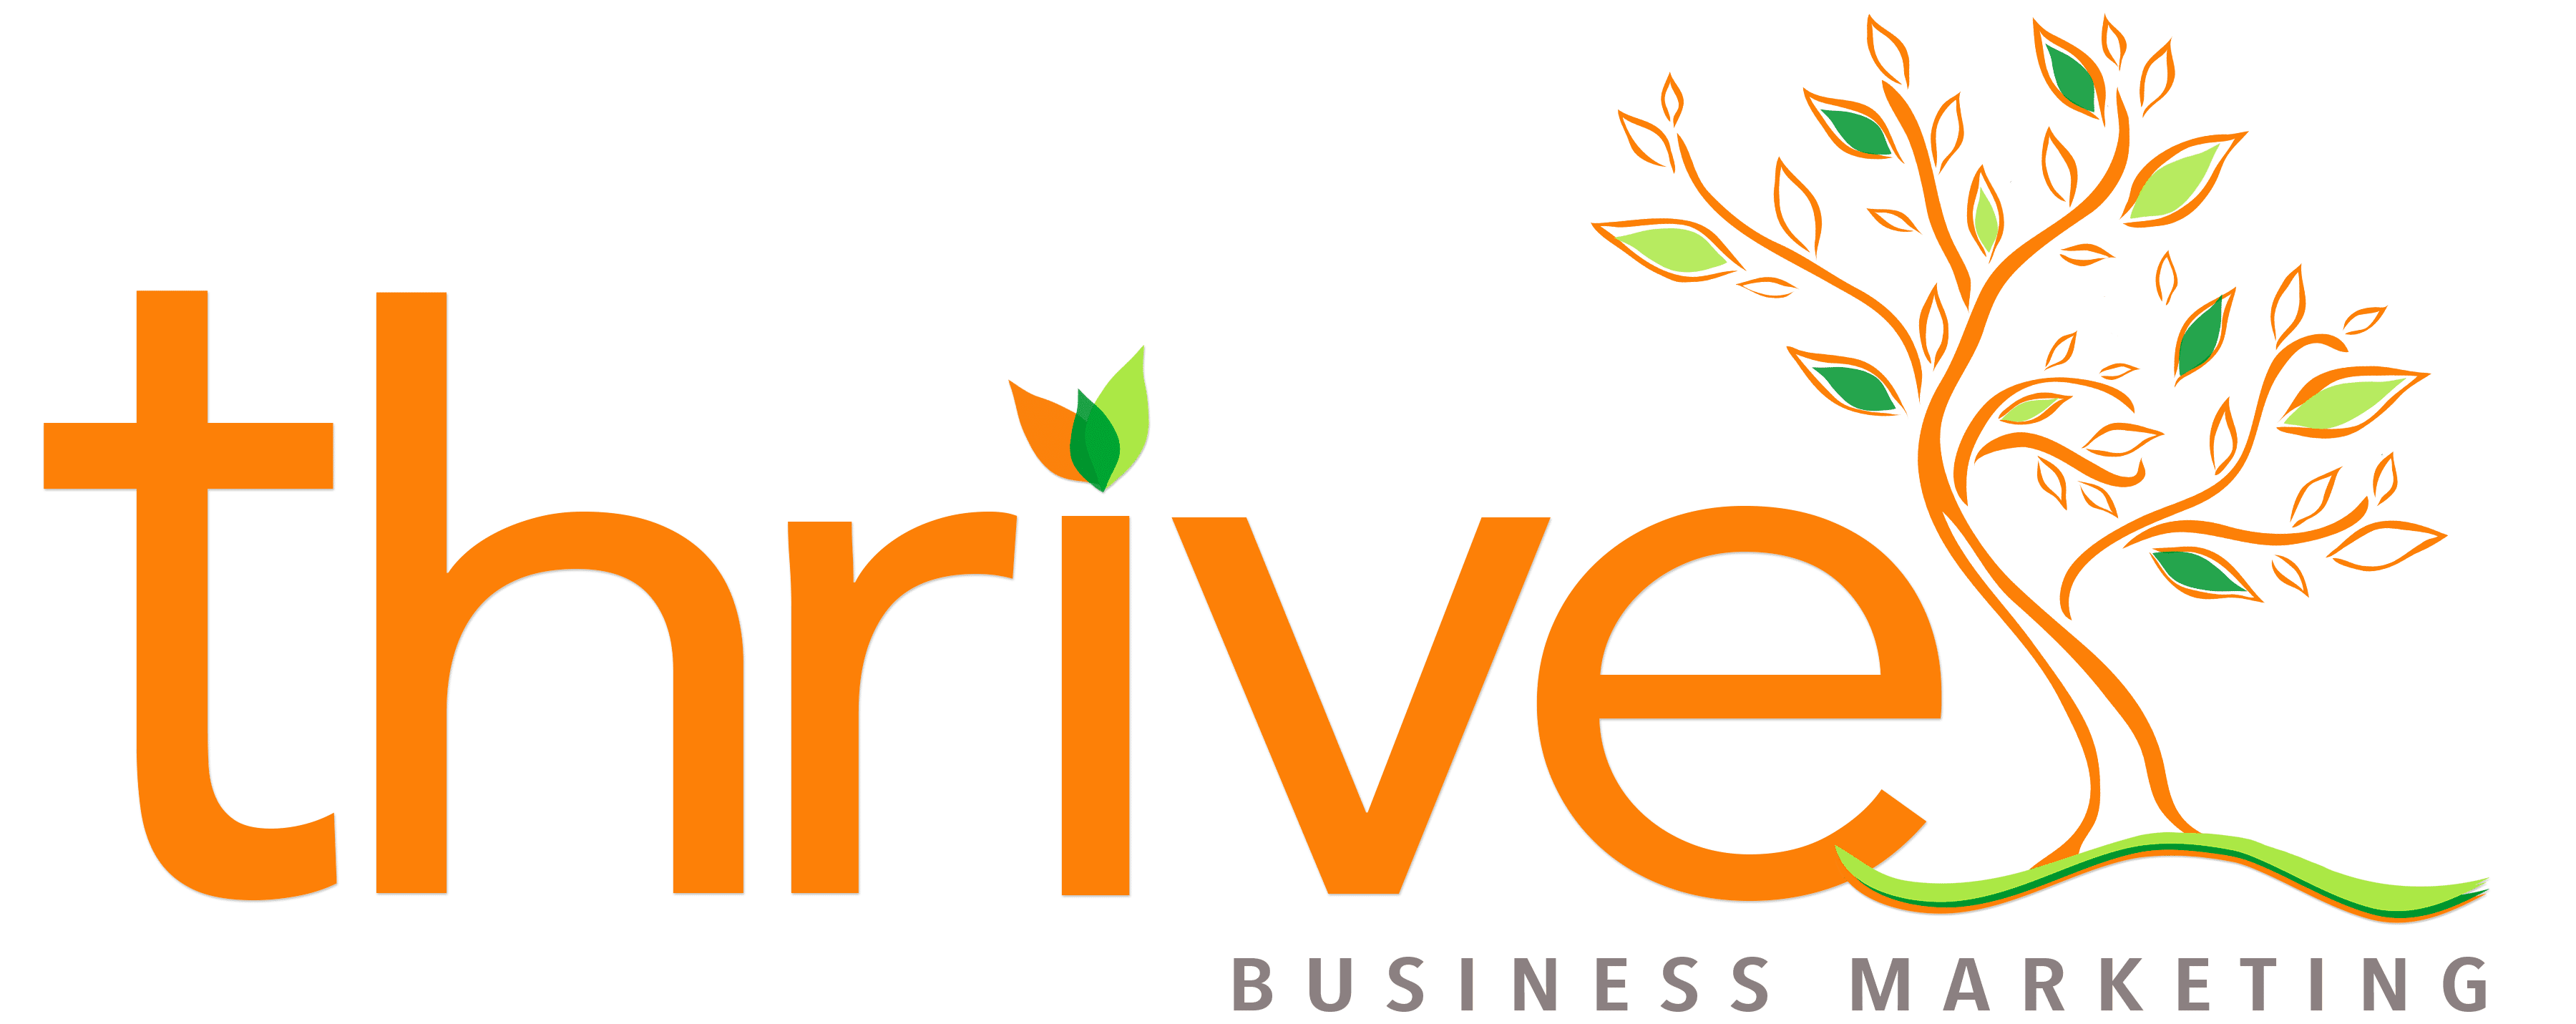 Thrive Business Marketing company logo